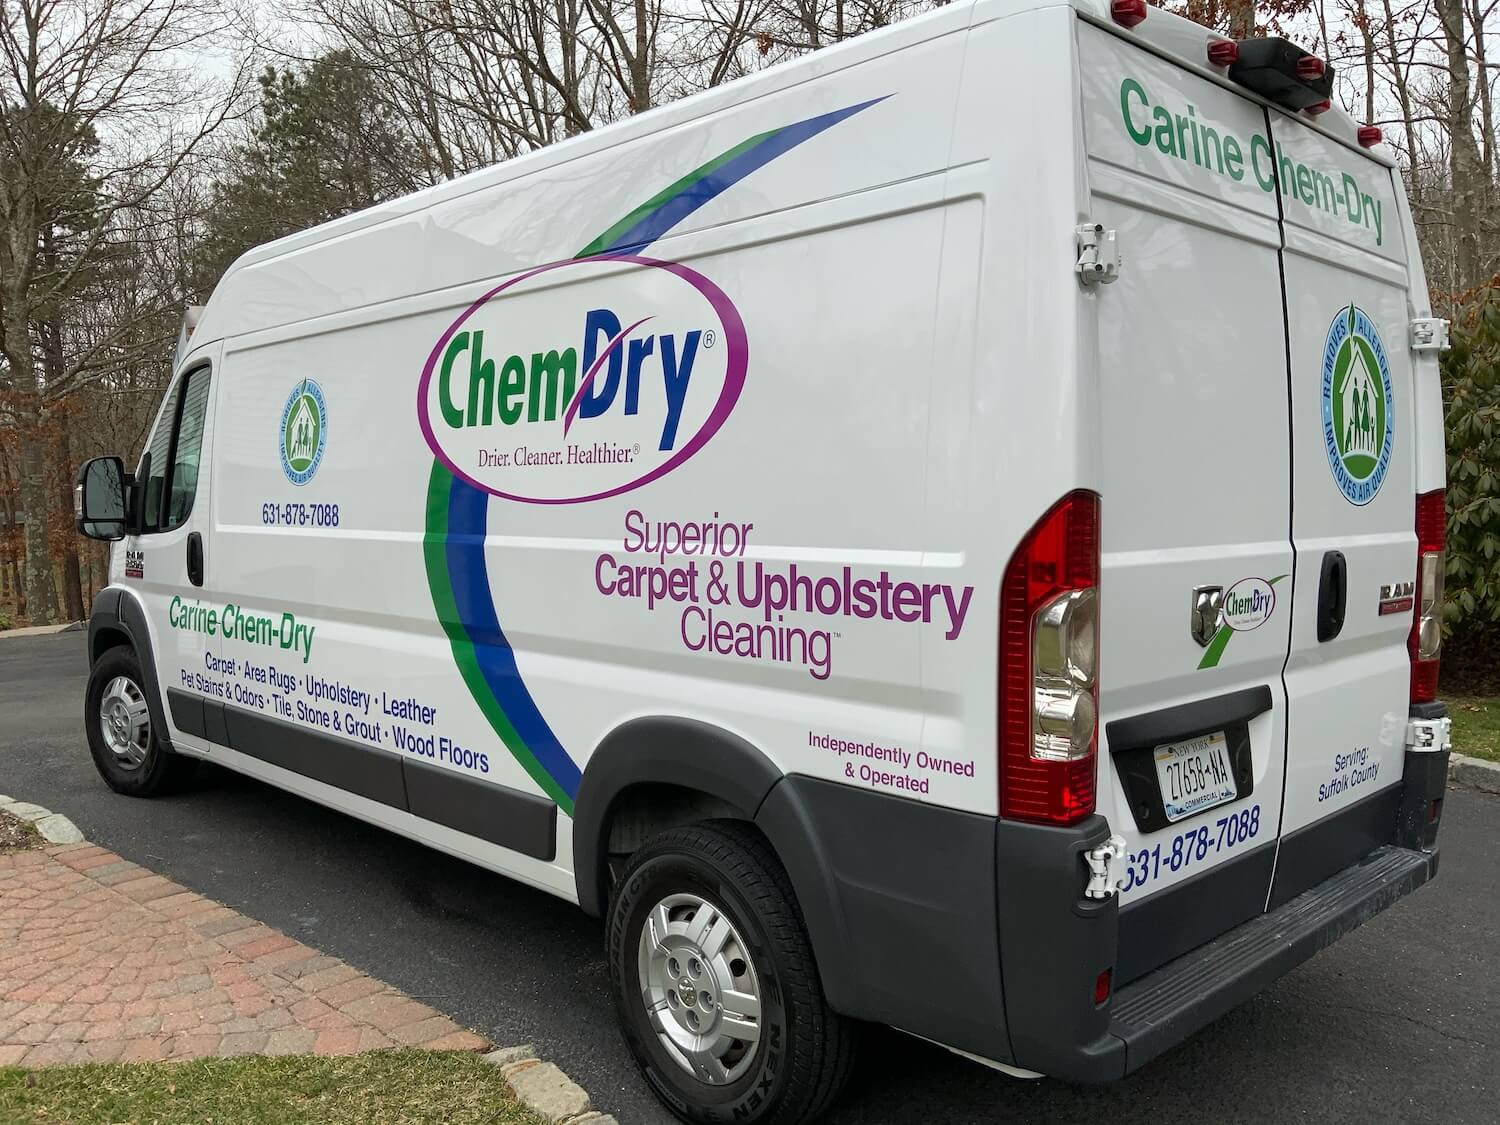 Carine Chem-Dry Carpet Cleaning Van